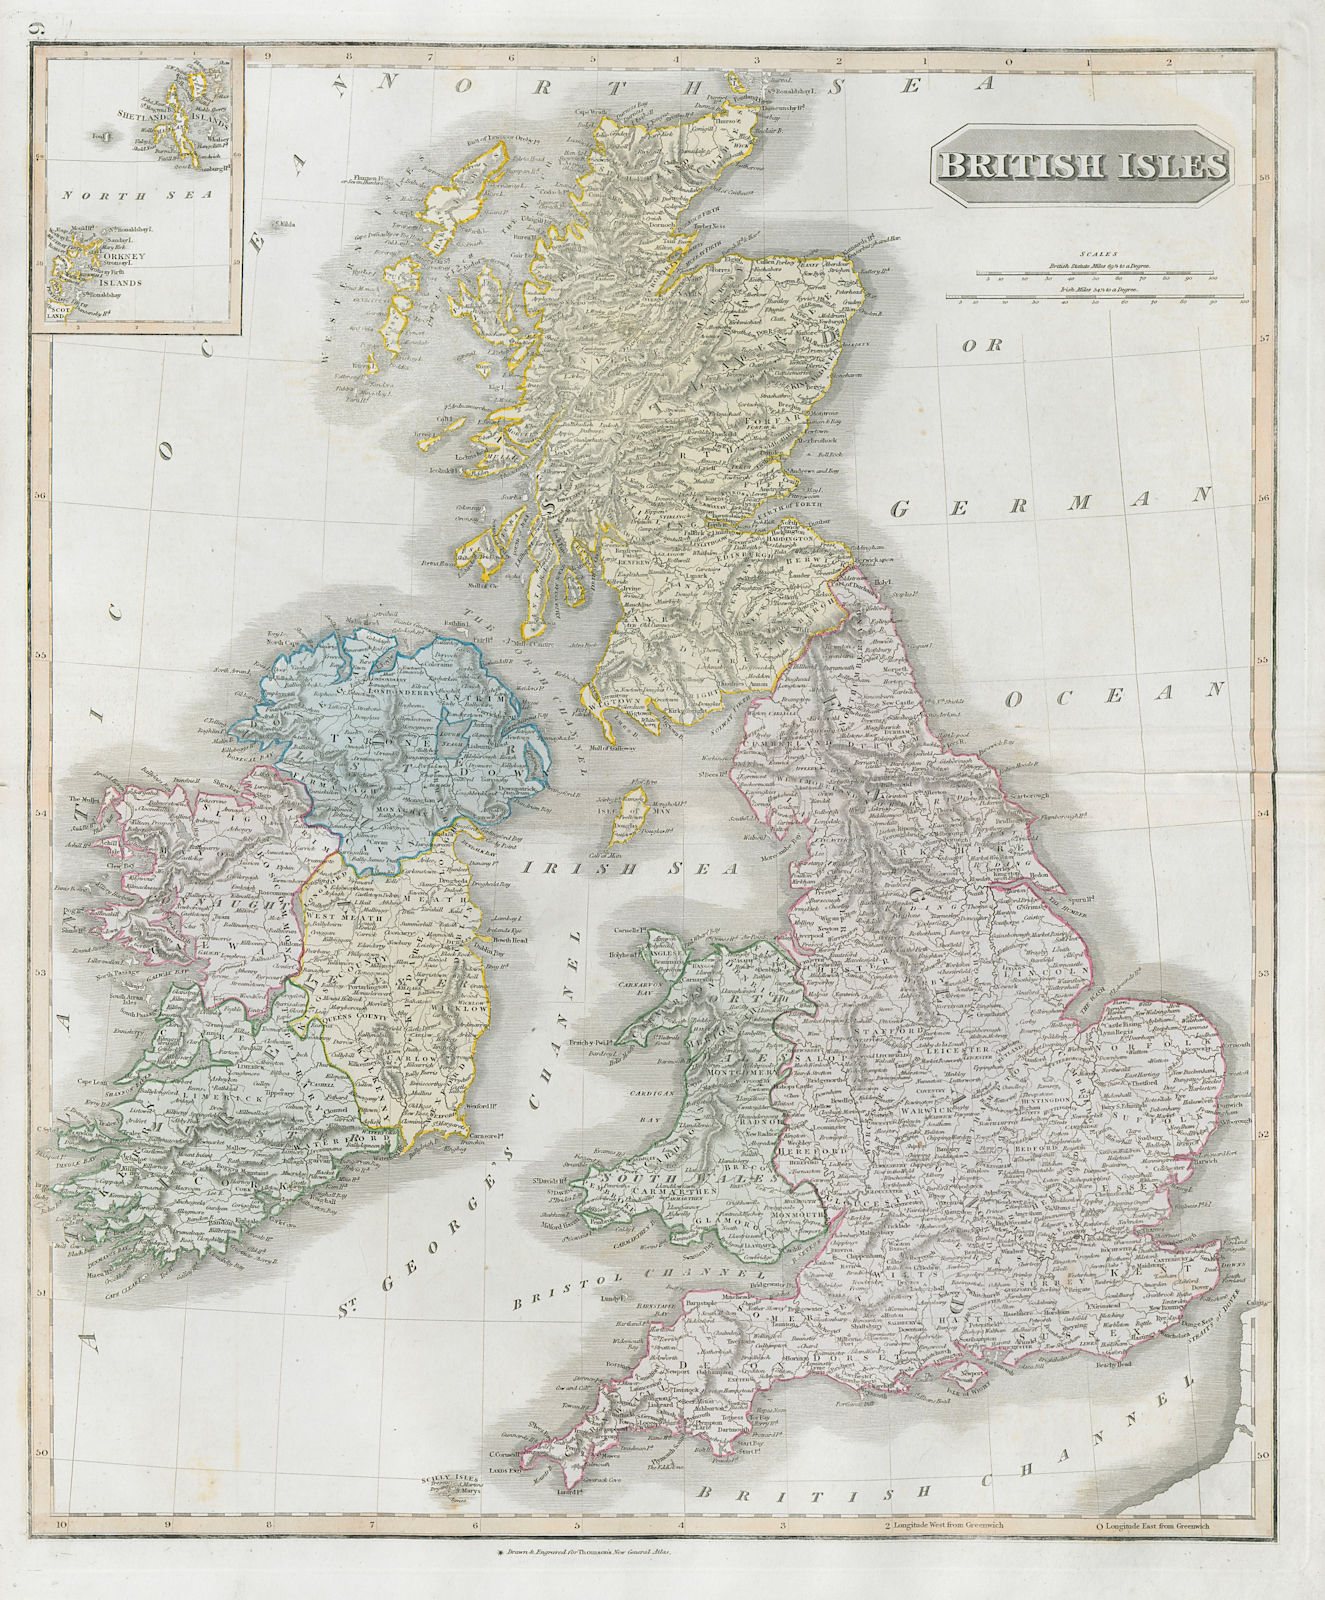 "British Isles" by John Thomson. England Ireland Scotland Wales 1830 old map